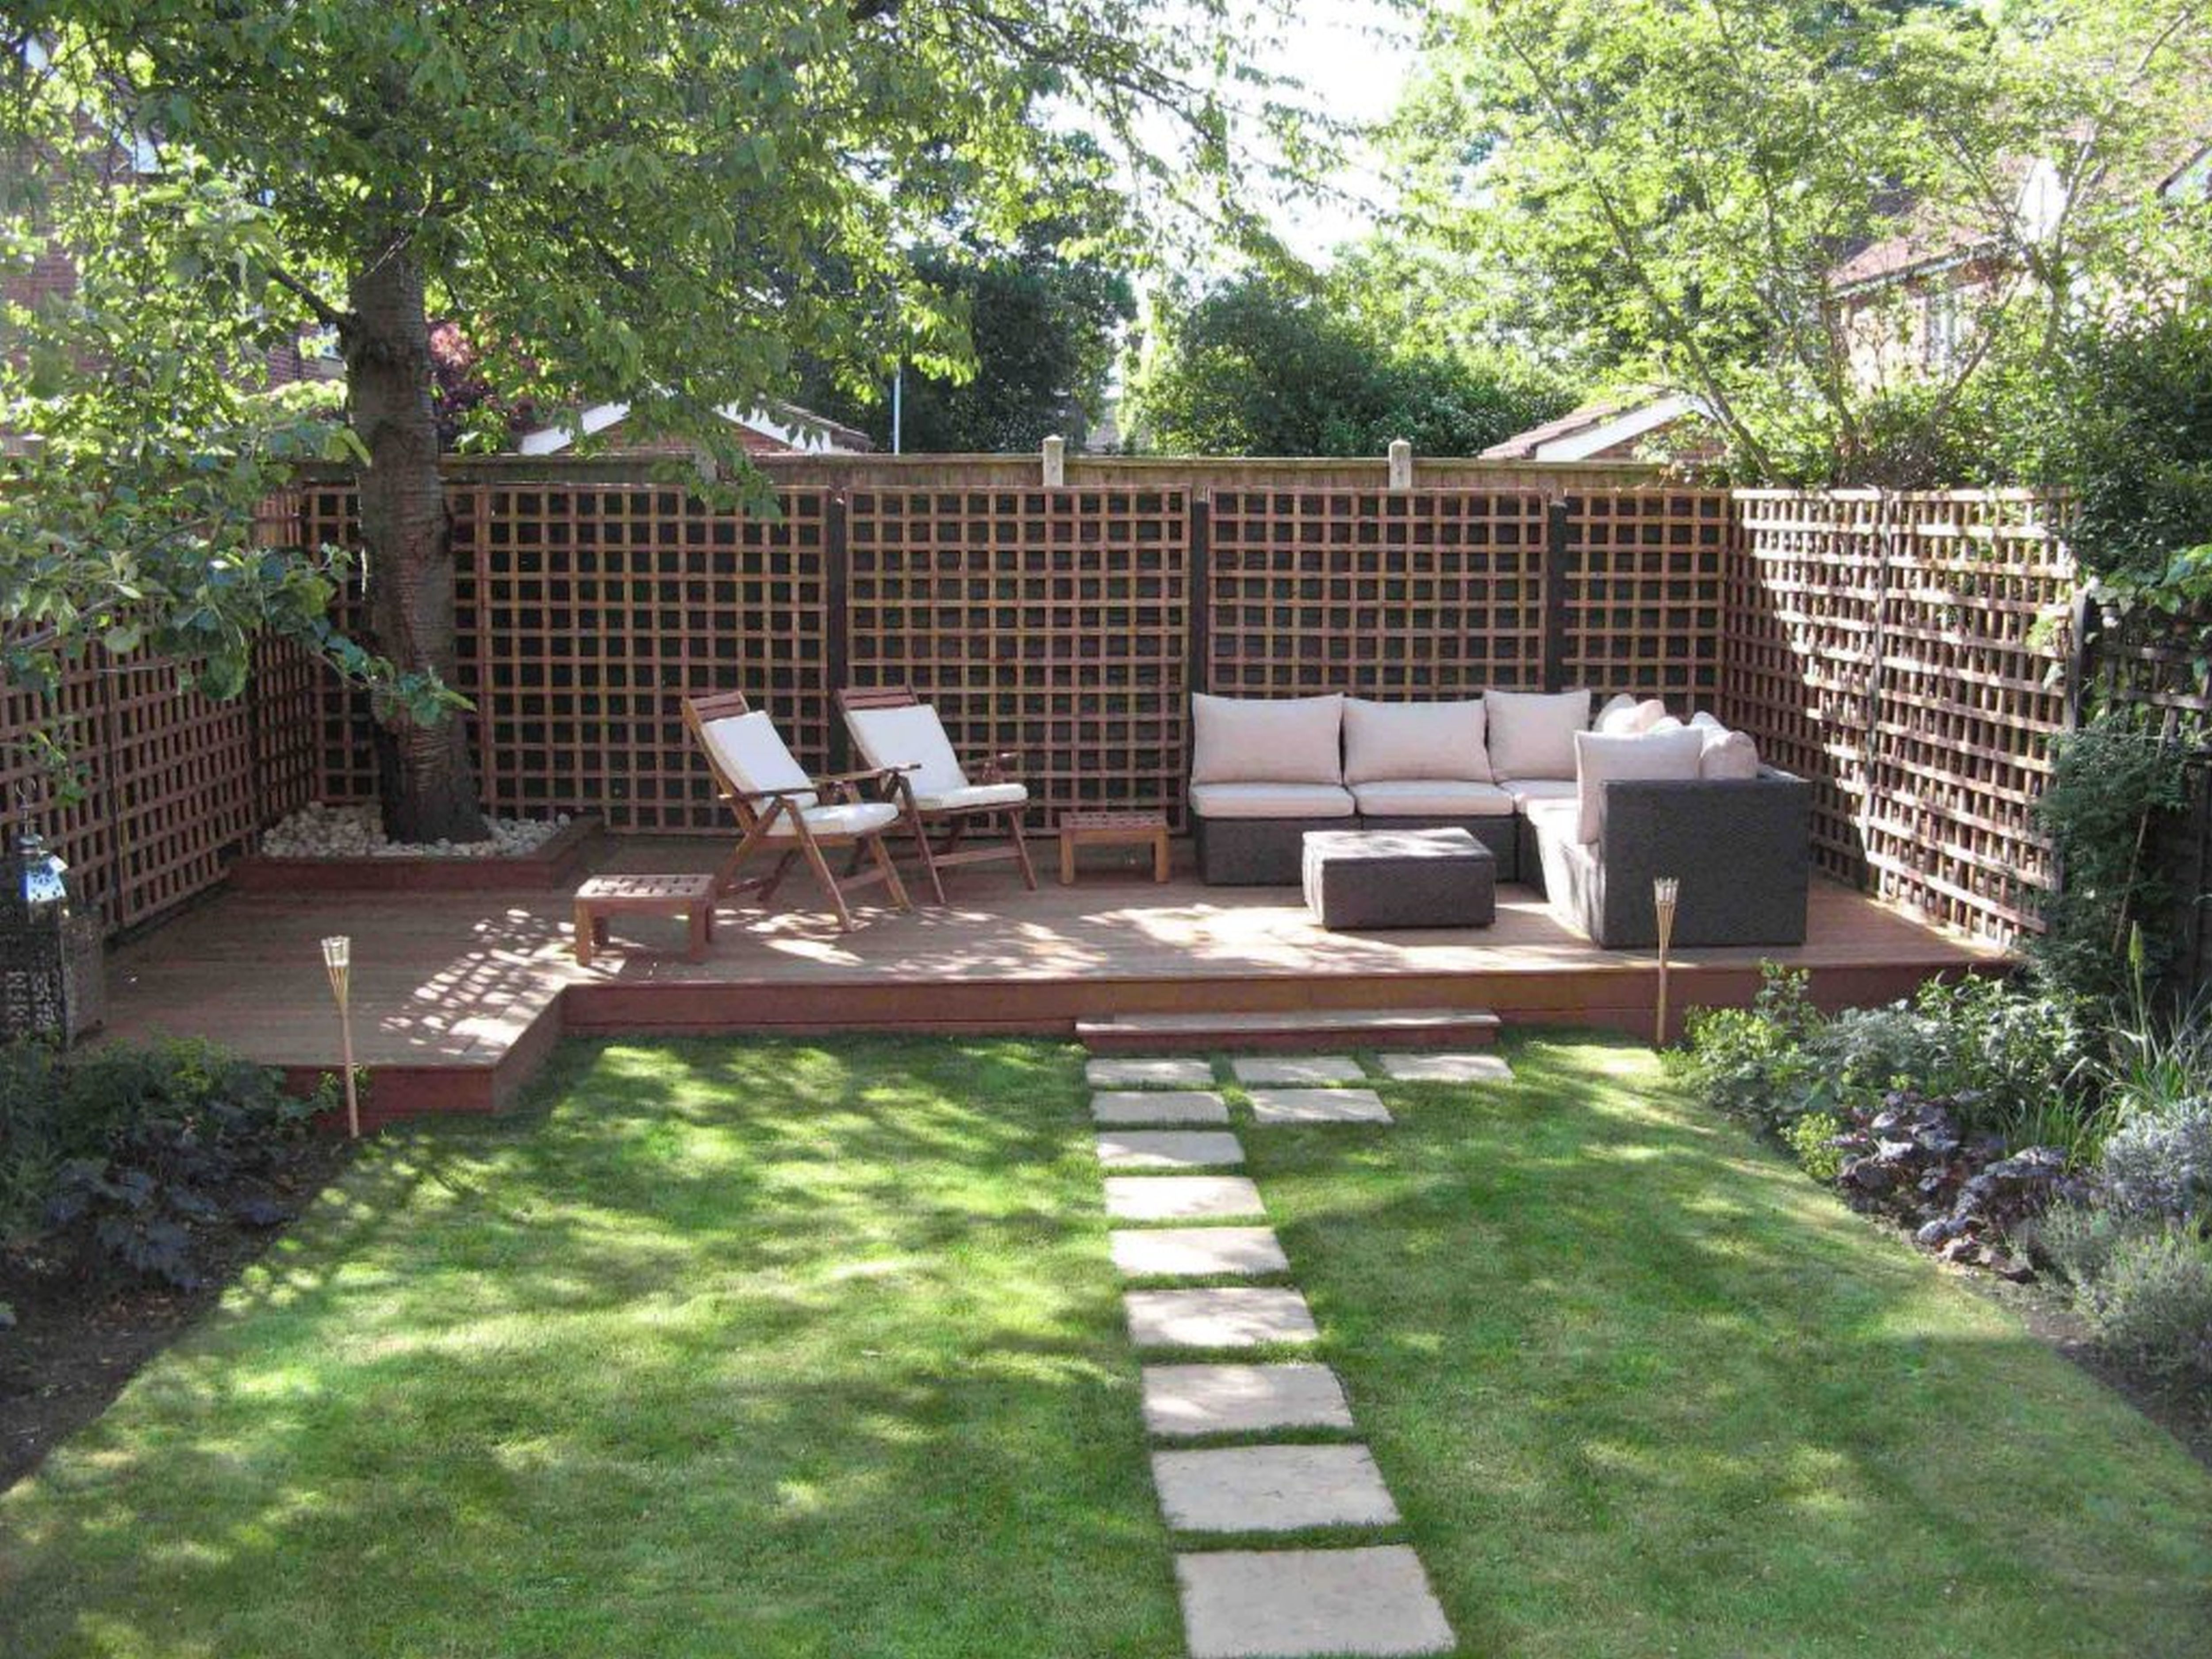 backyard-features-splendid-backyard-features-garden-design-ideas-sweet-backyard-landscaping-design-ideas-budget-with-fetching-small-backyard-ideas-for-kids-kid-friendly-backya